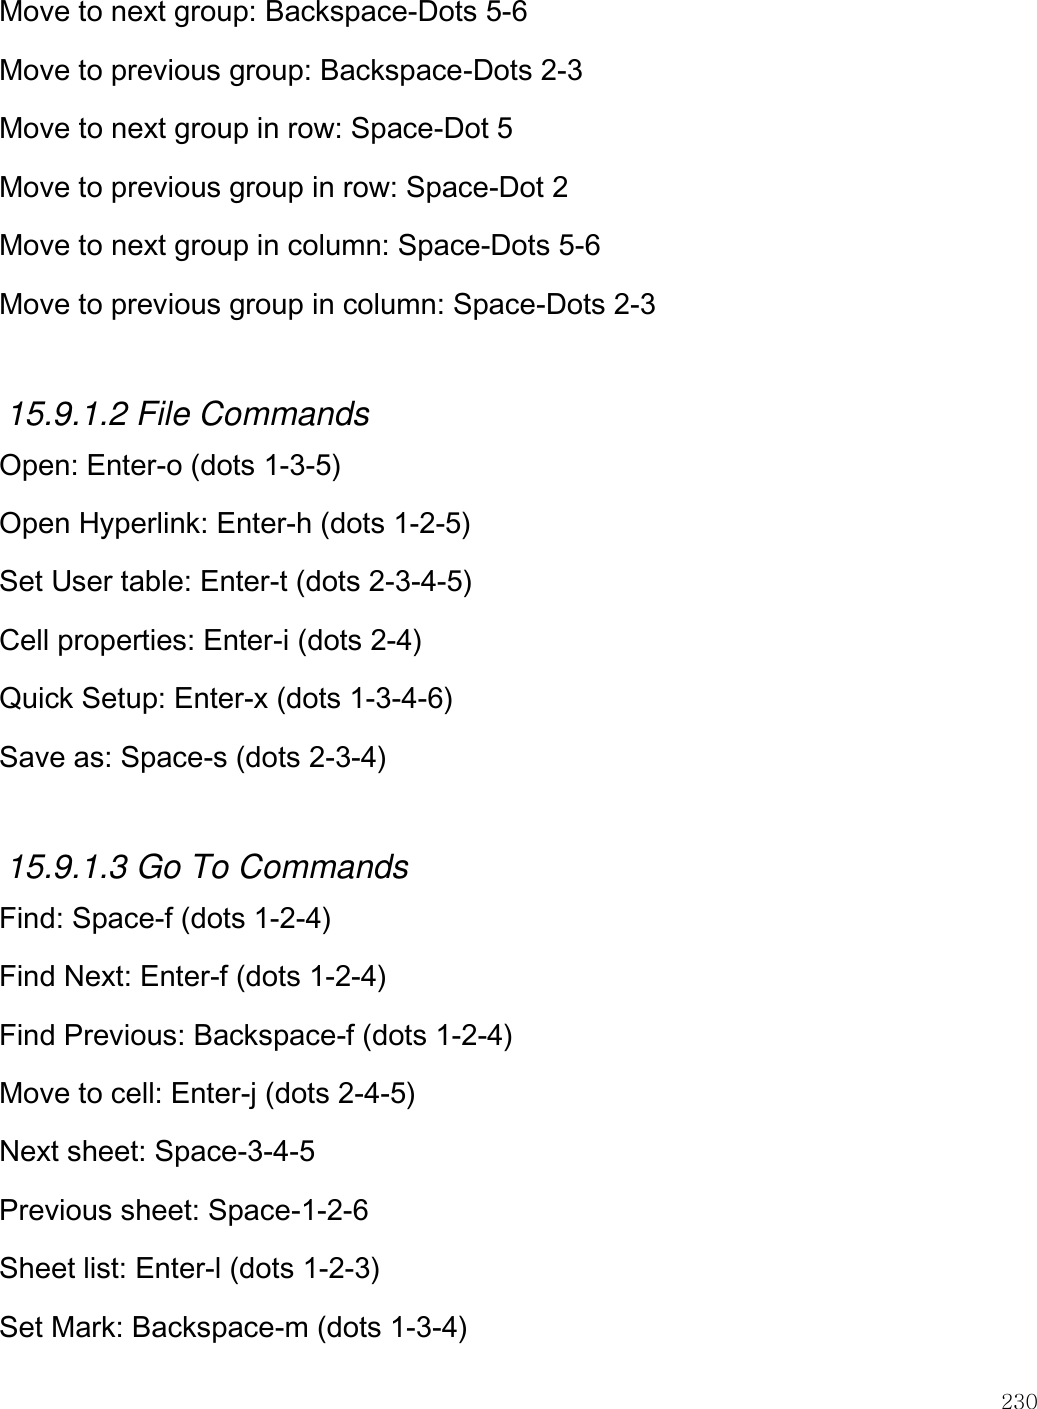    230  Move to next group: Backspace-Dots 5-6 Move to previous group: Backspace-Dots 2-3 Move to next group in row: Space-Dot 5 Move to previous group in row: Space-Dot 2 Move to next group in column: Space-Dots 5-6 Move to previous group in column: Space-Dots 2-3  15.9.1.2 File Commands Open: Enter-o (dots 1-3-5) Open Hyperlink: Enter-h (dots 1-2-5) Set User table: Enter-t (dots 2-3-4-5) Cell properties: Enter-i (dots 2-4) Quick Setup: Enter-x (dots 1-3-4-6) Save as: Space-s (dots 2-3-4)  15.9.1.3 Go To Commands Find: Space-f (dots 1-2-4) Find Next: Enter-f (dots 1-2-4) Find Previous: Backspace-f (dots 1-2-4) Move to cell: Enter-j (dots 2-4-5) Next sheet: Space-3-4-5 Previous sheet: Space-1-2-6 Sheet list: Enter-l (dots 1-2-3) Set Mark: Backspace-m (dots 1-3-4) 